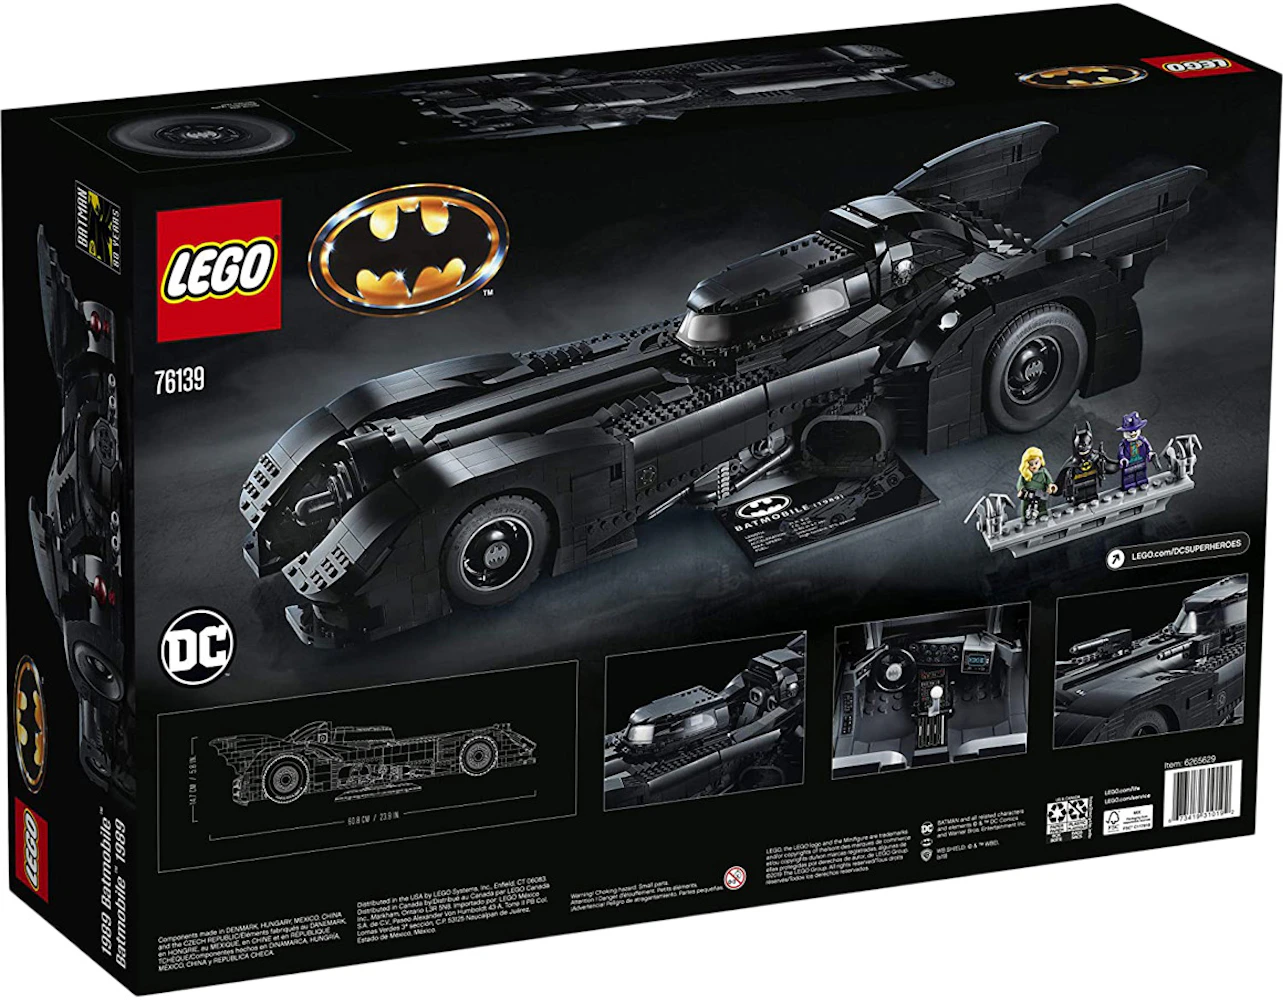 https://images.stockx.com/images/Lego-Batman-1989-Batmobile-Set-76139-3.jpg?fit=fill&bg=FFFFFF&w=700&h=500&fm=webp&auto=compress&q=90&dpr=2&trim=color&updated_at=1646412781?height=78&width=78